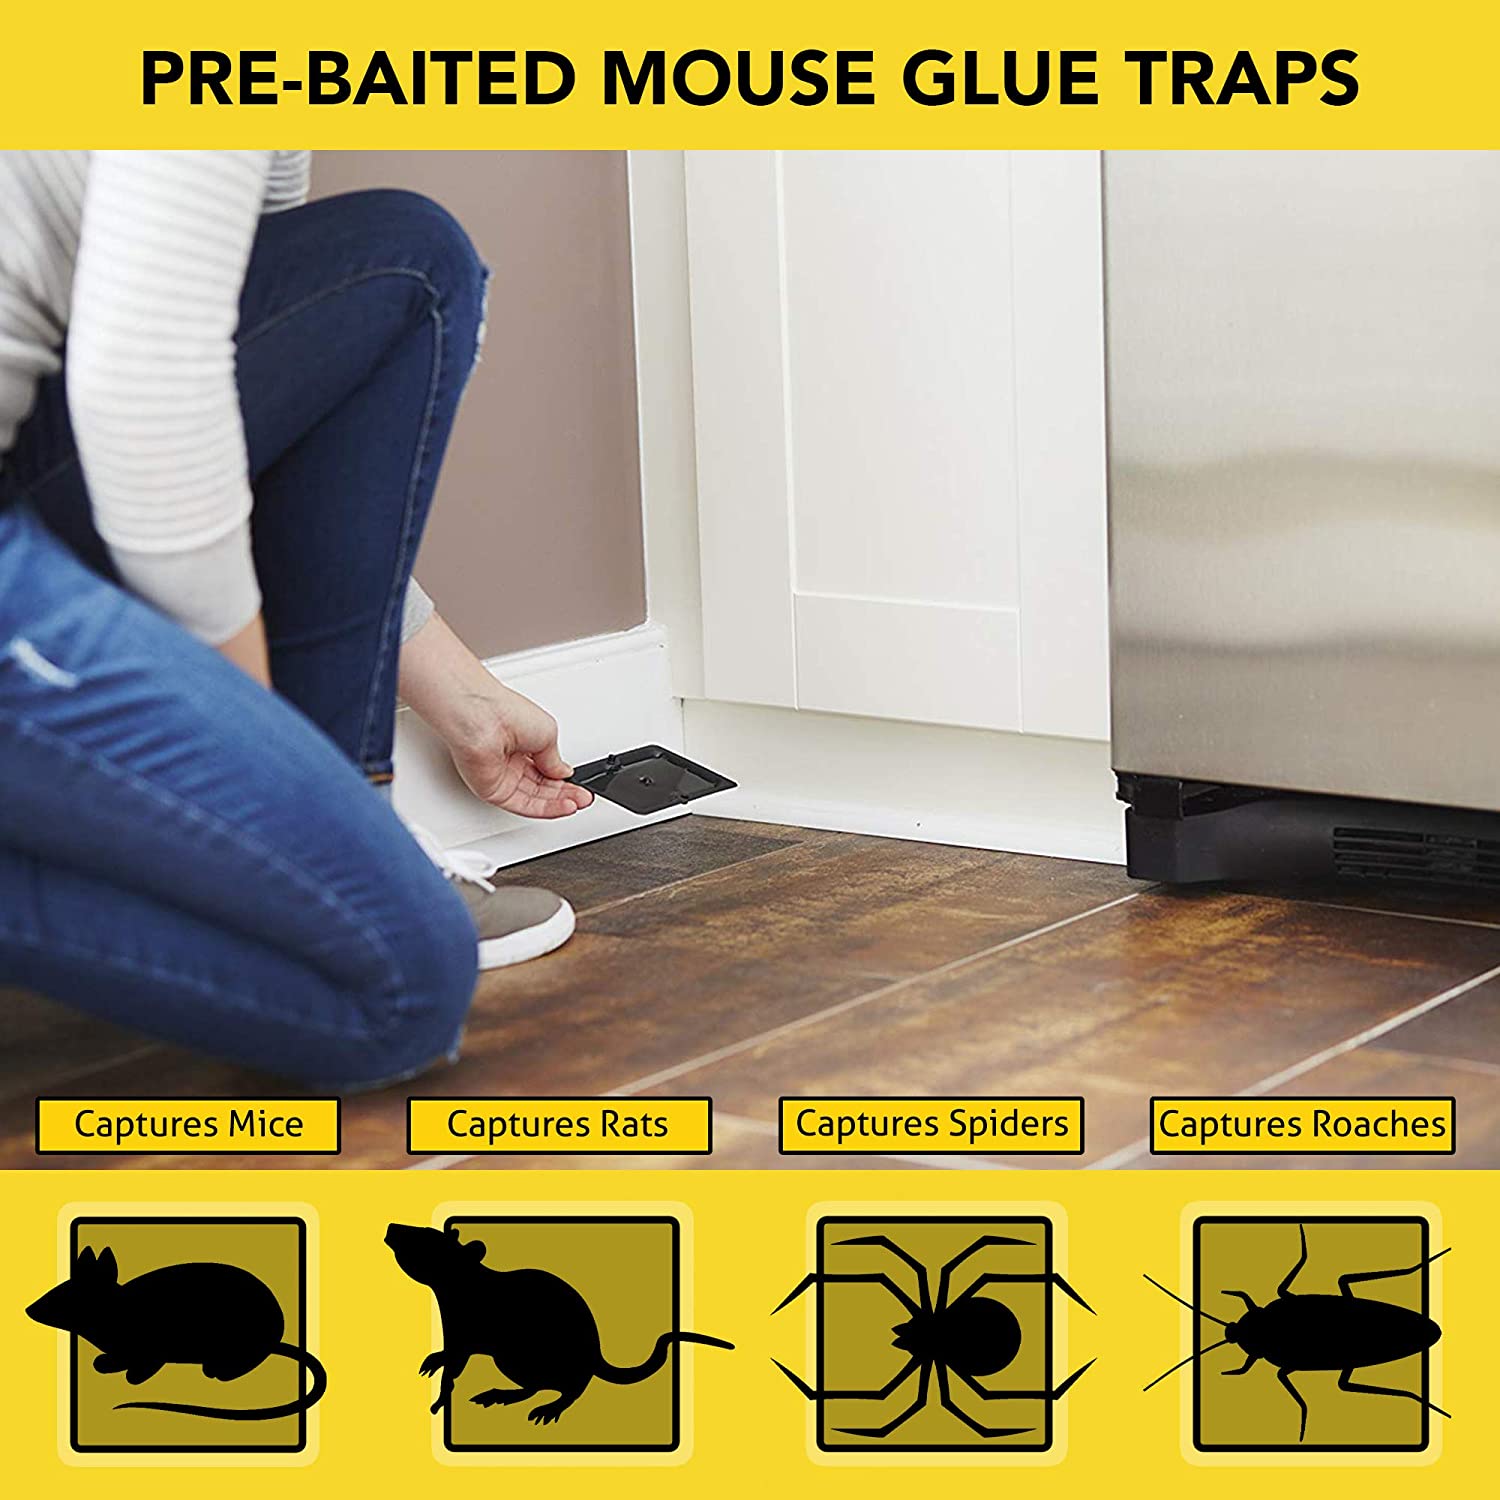 Harris Mouse Glue Traps (4-Pack) - PF Harris